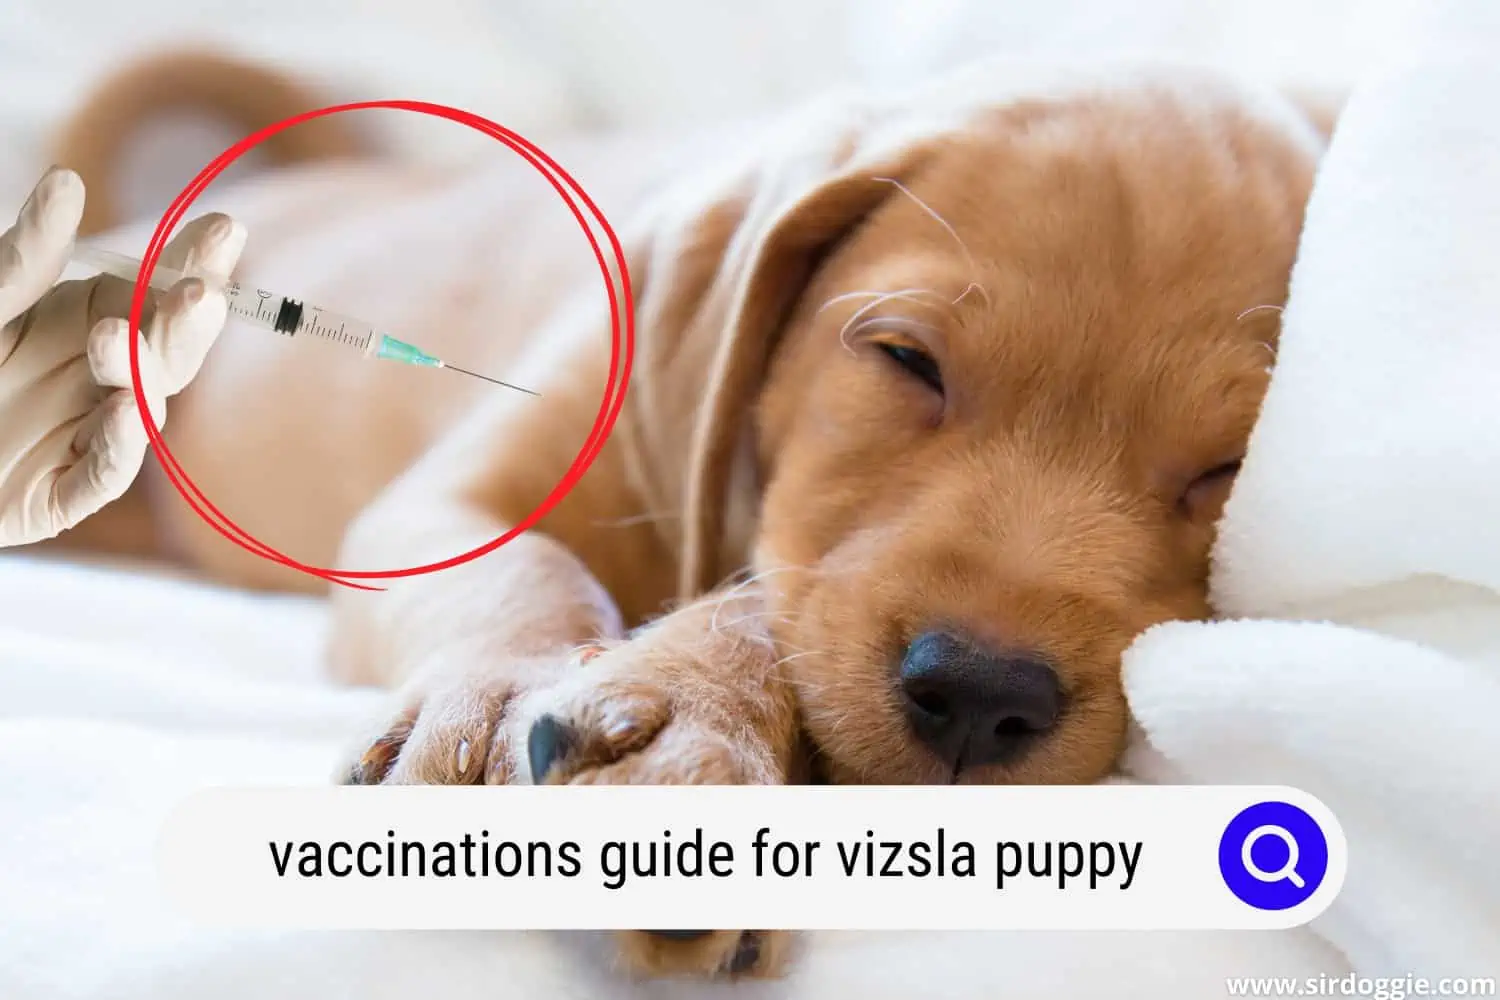 Vizsla puppy getting vaccinated